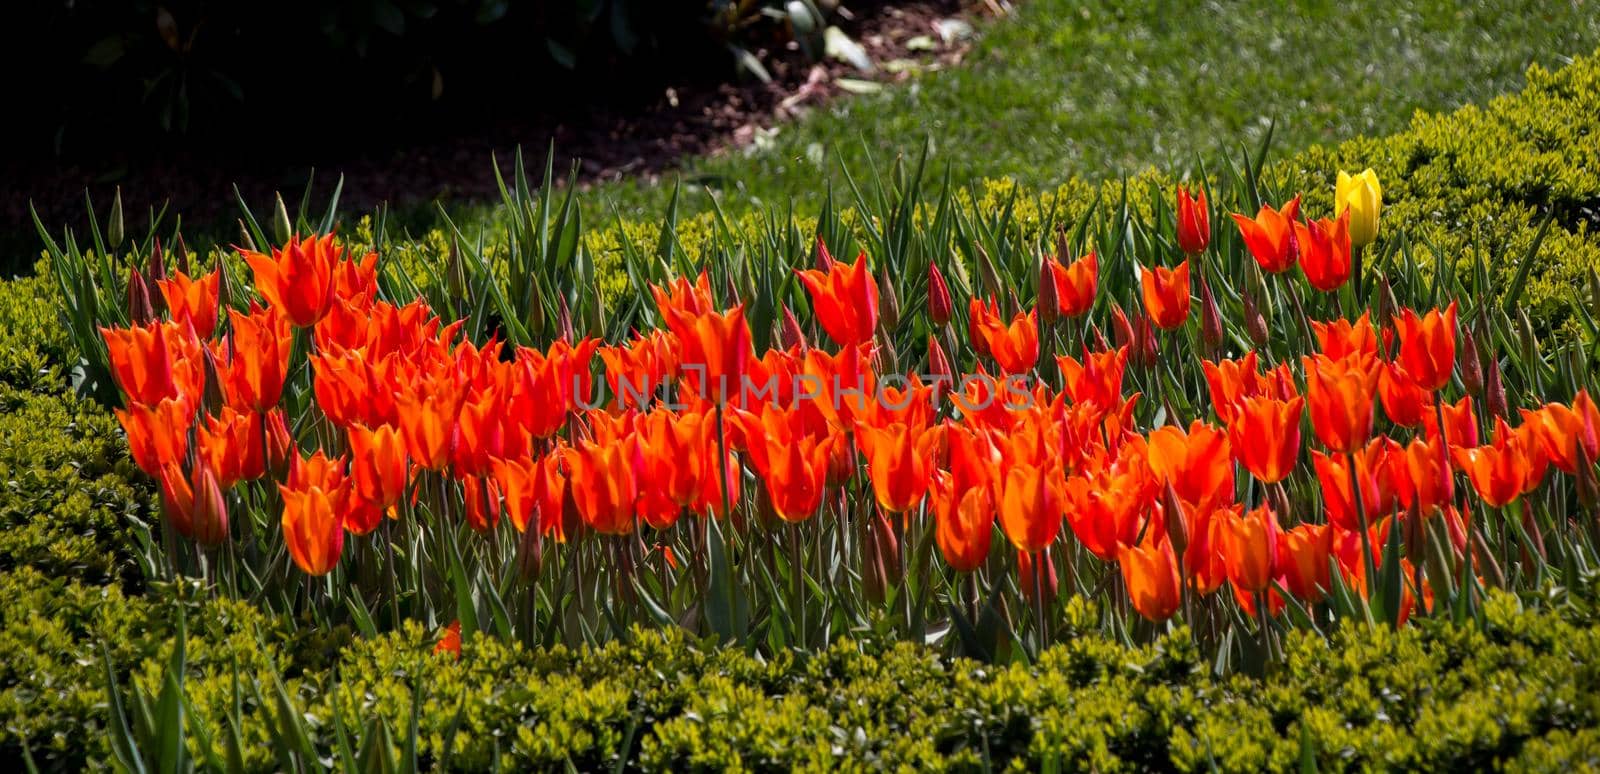 Orange color tulip flowers in the garden by berkay